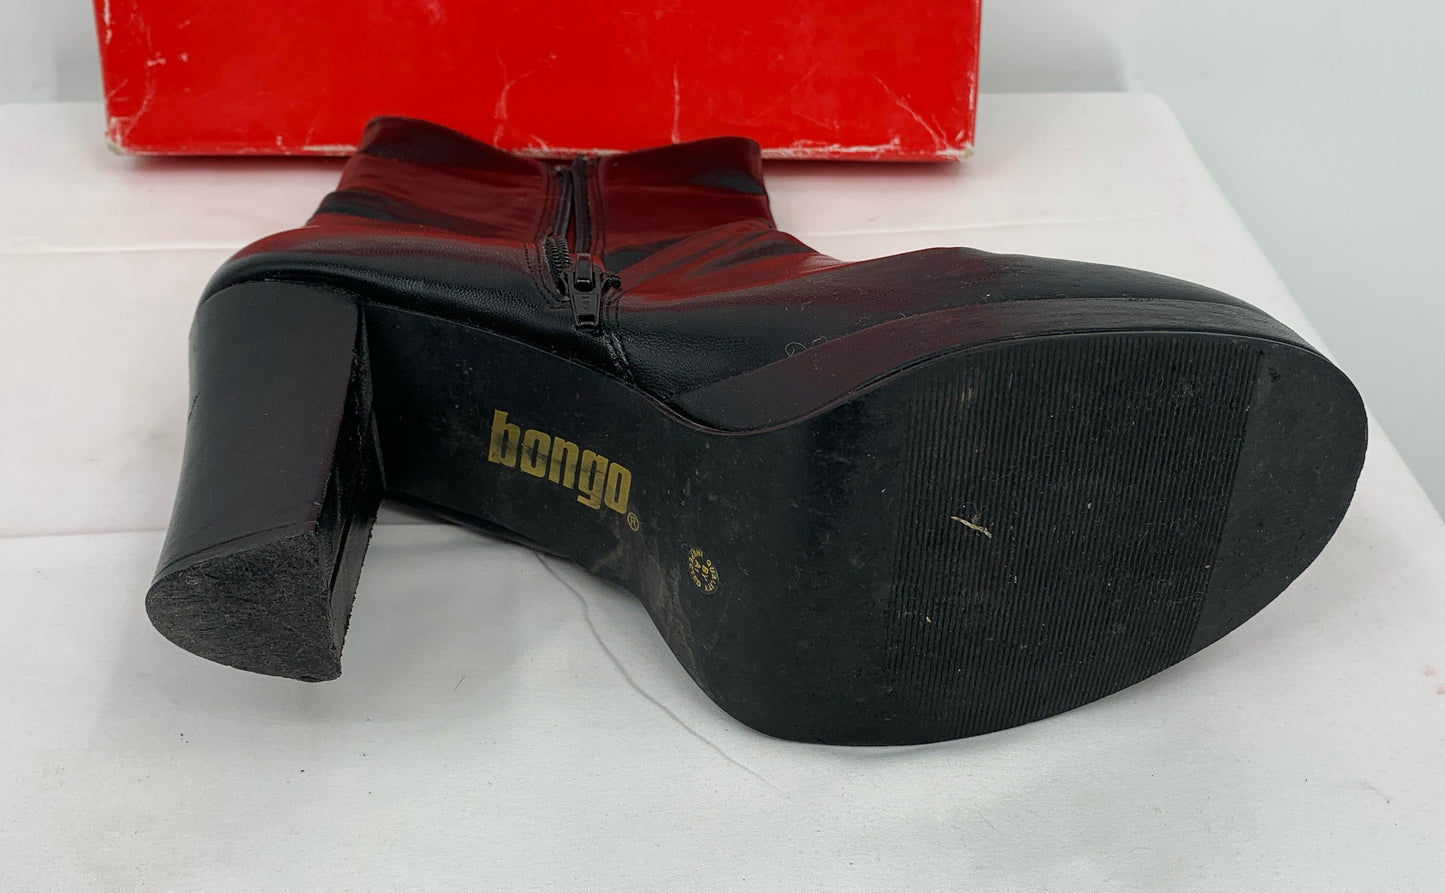 Vintage 1990's Bongo Betty Boot Black 10 M(B) Side Zip With Original Box